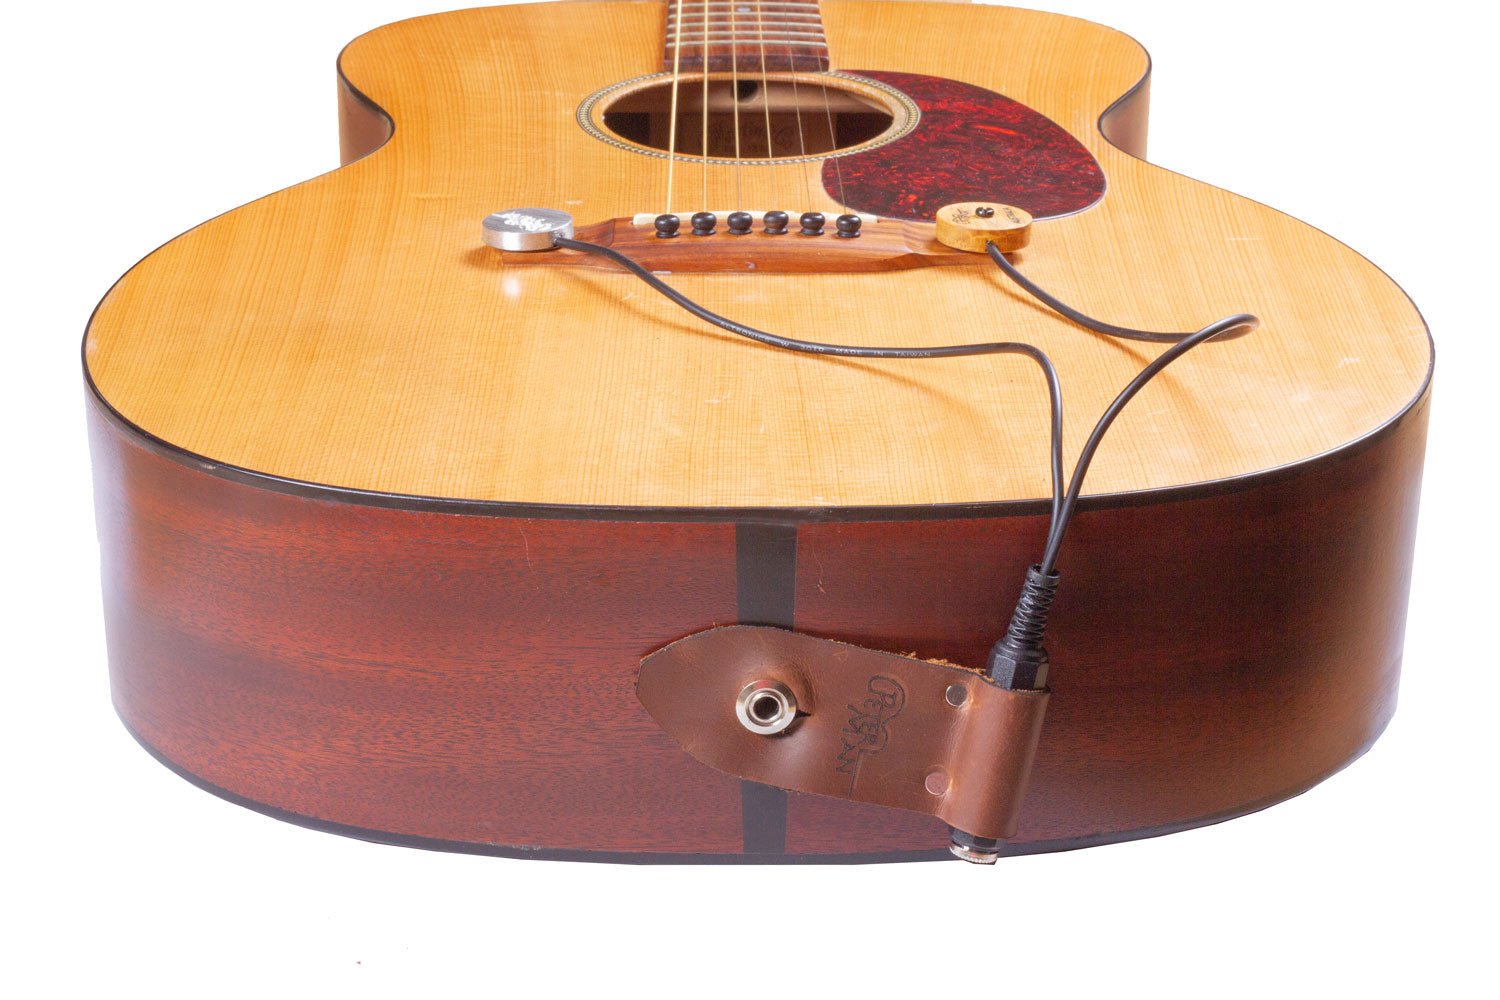 Pickup dual external acoustic cello pickup - Peterman Acoustic custom